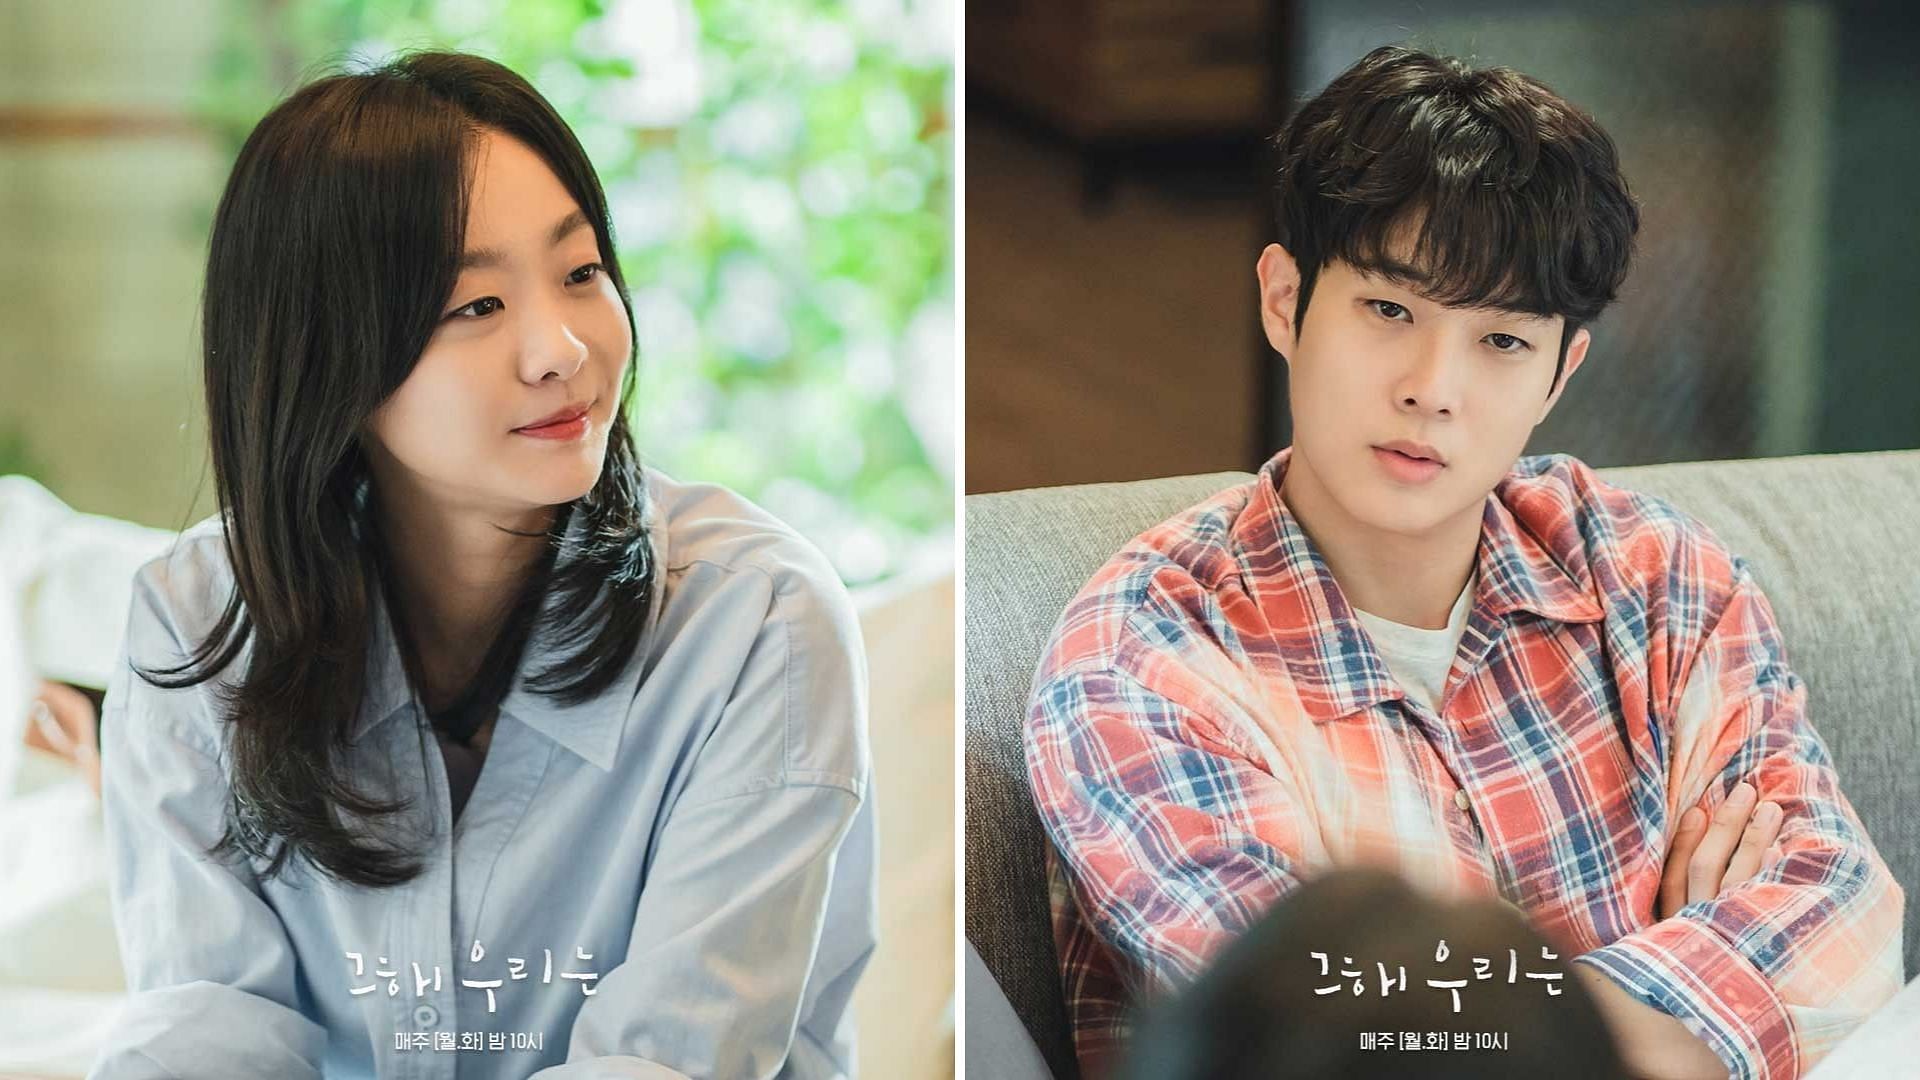 Our Beloved Summer episode 1: Kim Da Mi and Choi Woo Shik off to a brilliant start